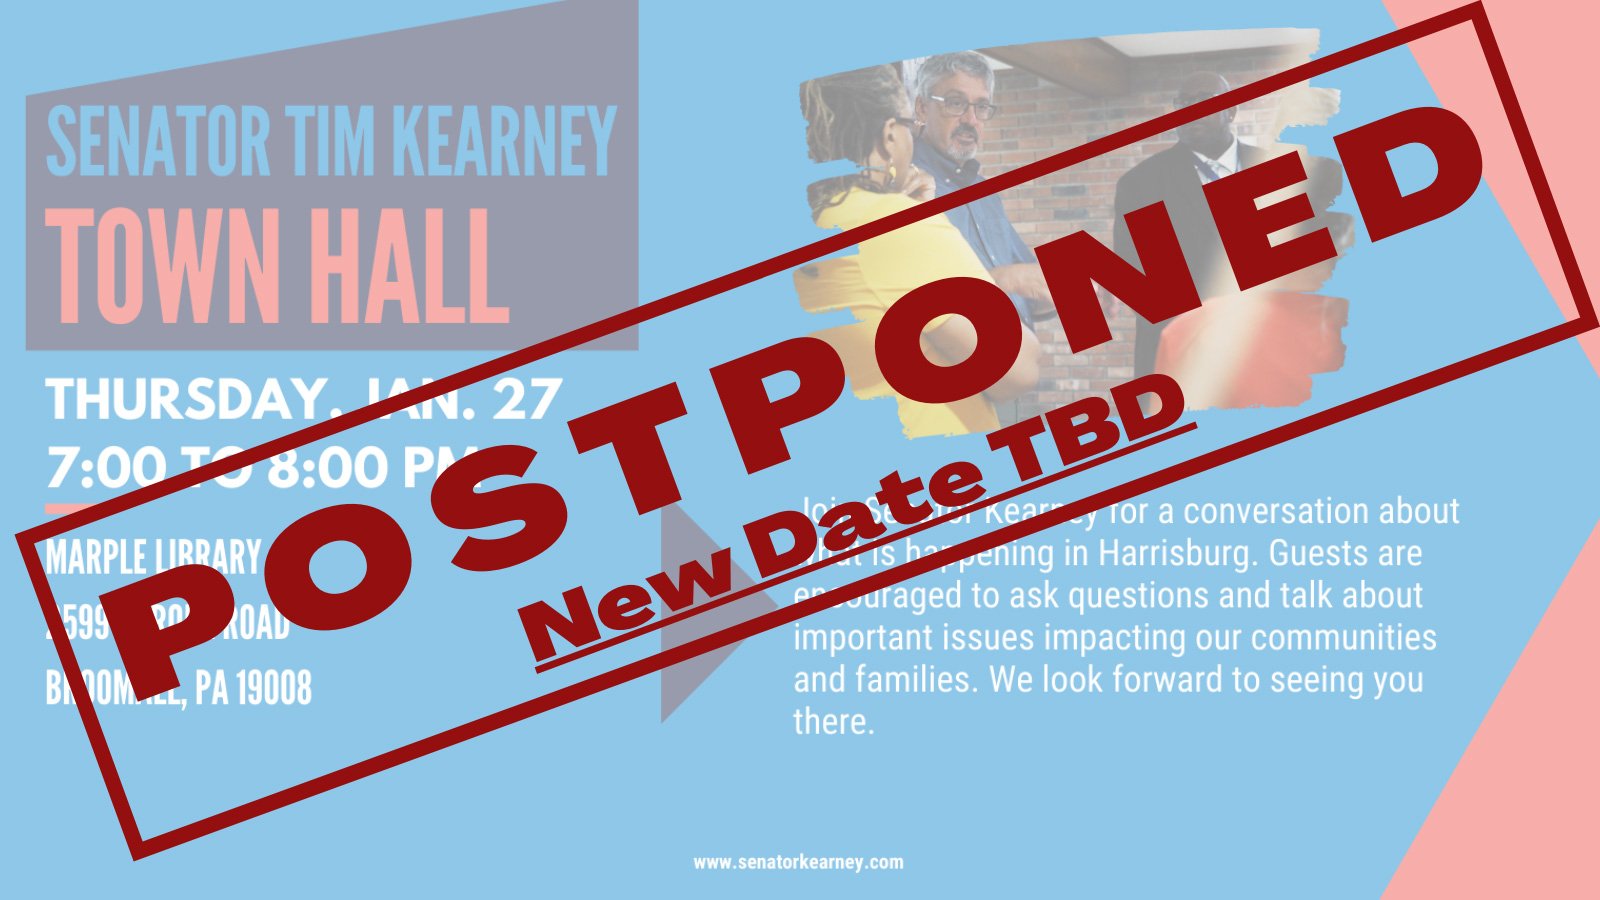 Senator Tim Kearney Town Hall - Postponed